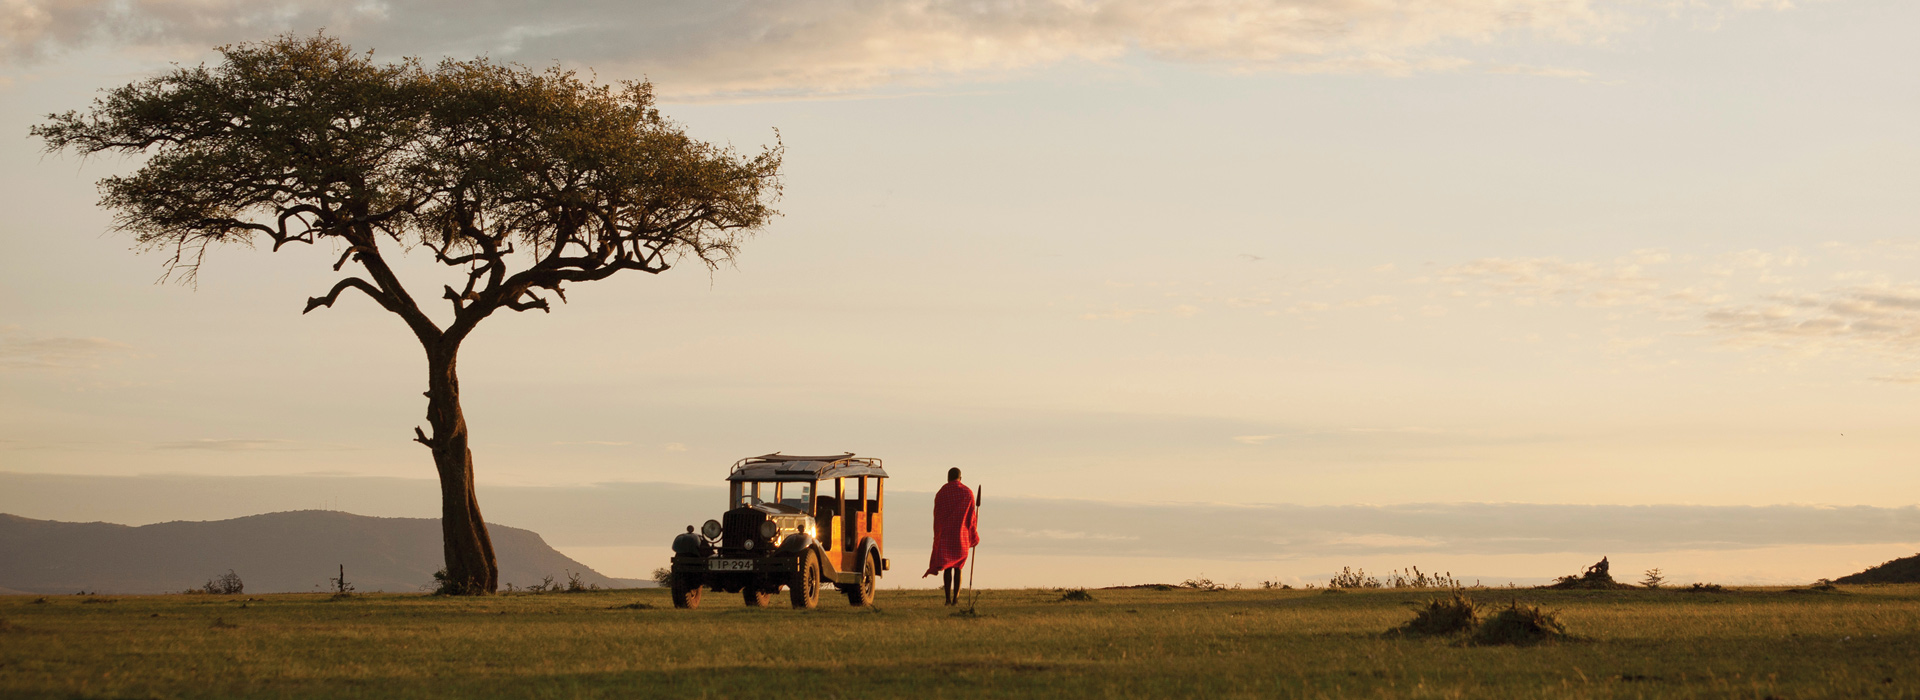 My Spectacular Masai Mara Experience The Globe Trotting Canuck